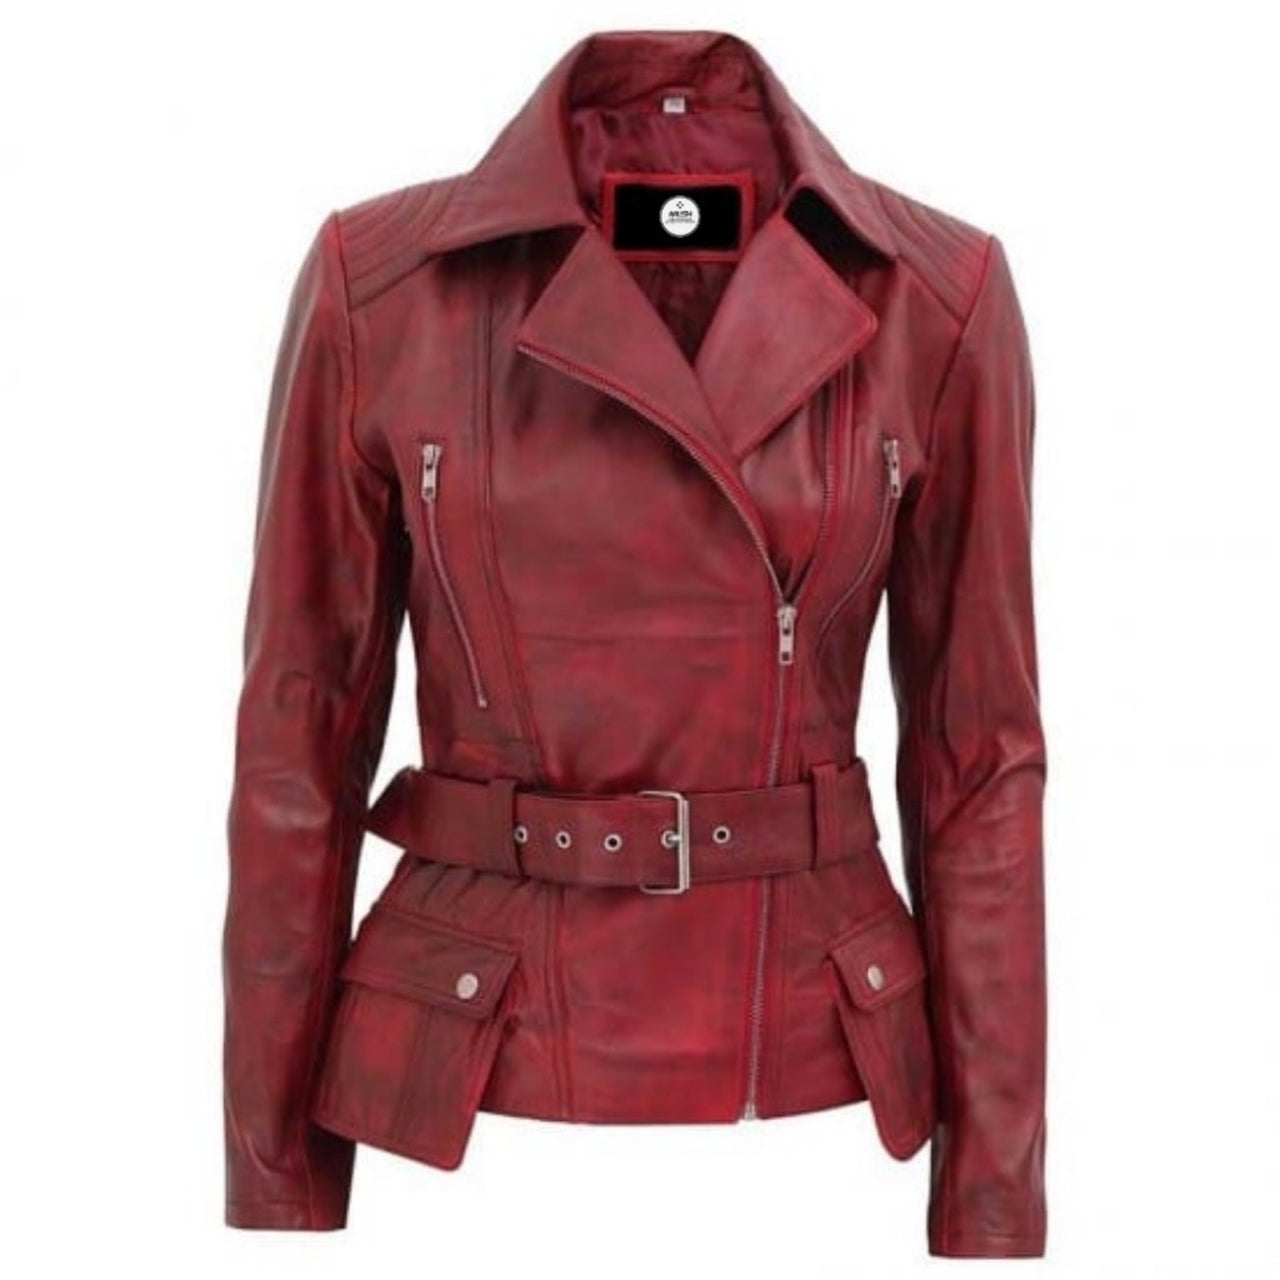 Stylish Maroon Leather Biker Jacket for Women - Women Leather Jacket - Leather Jacket